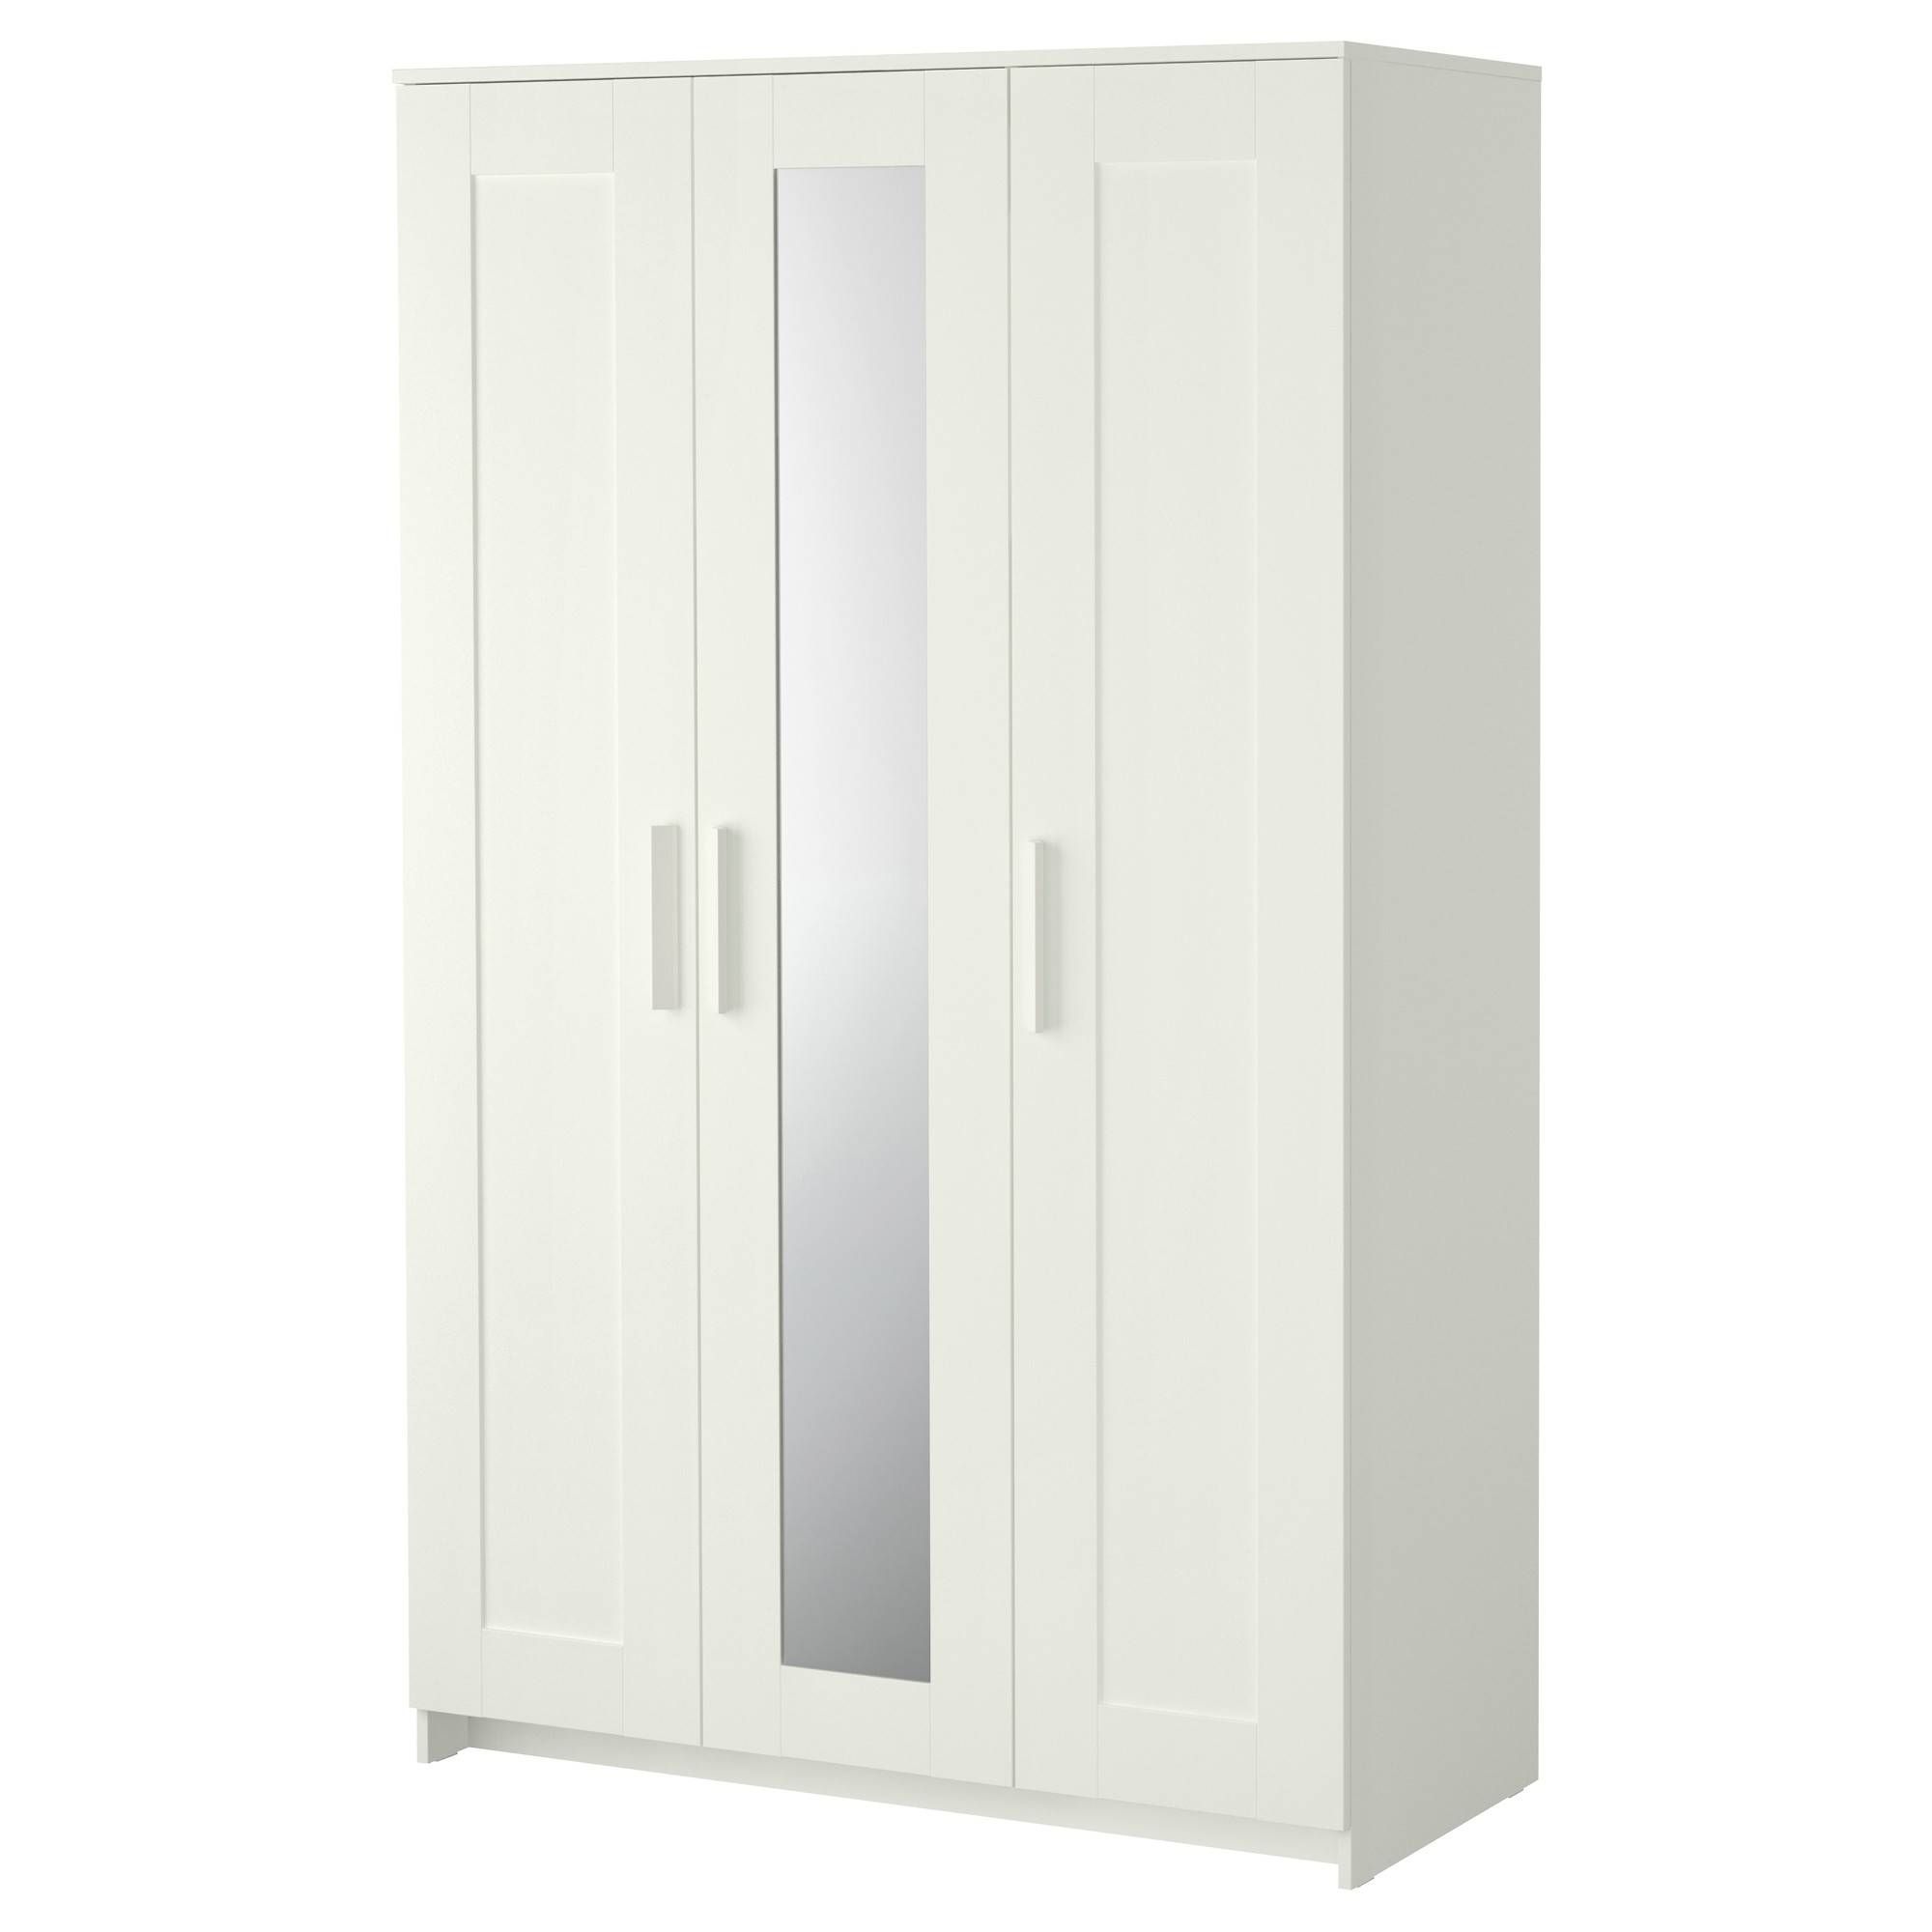 Brimnes Wardrobe With 3 Doors – White – Ikea Regarding White Three Door Wardrobes (View 12 of 15)